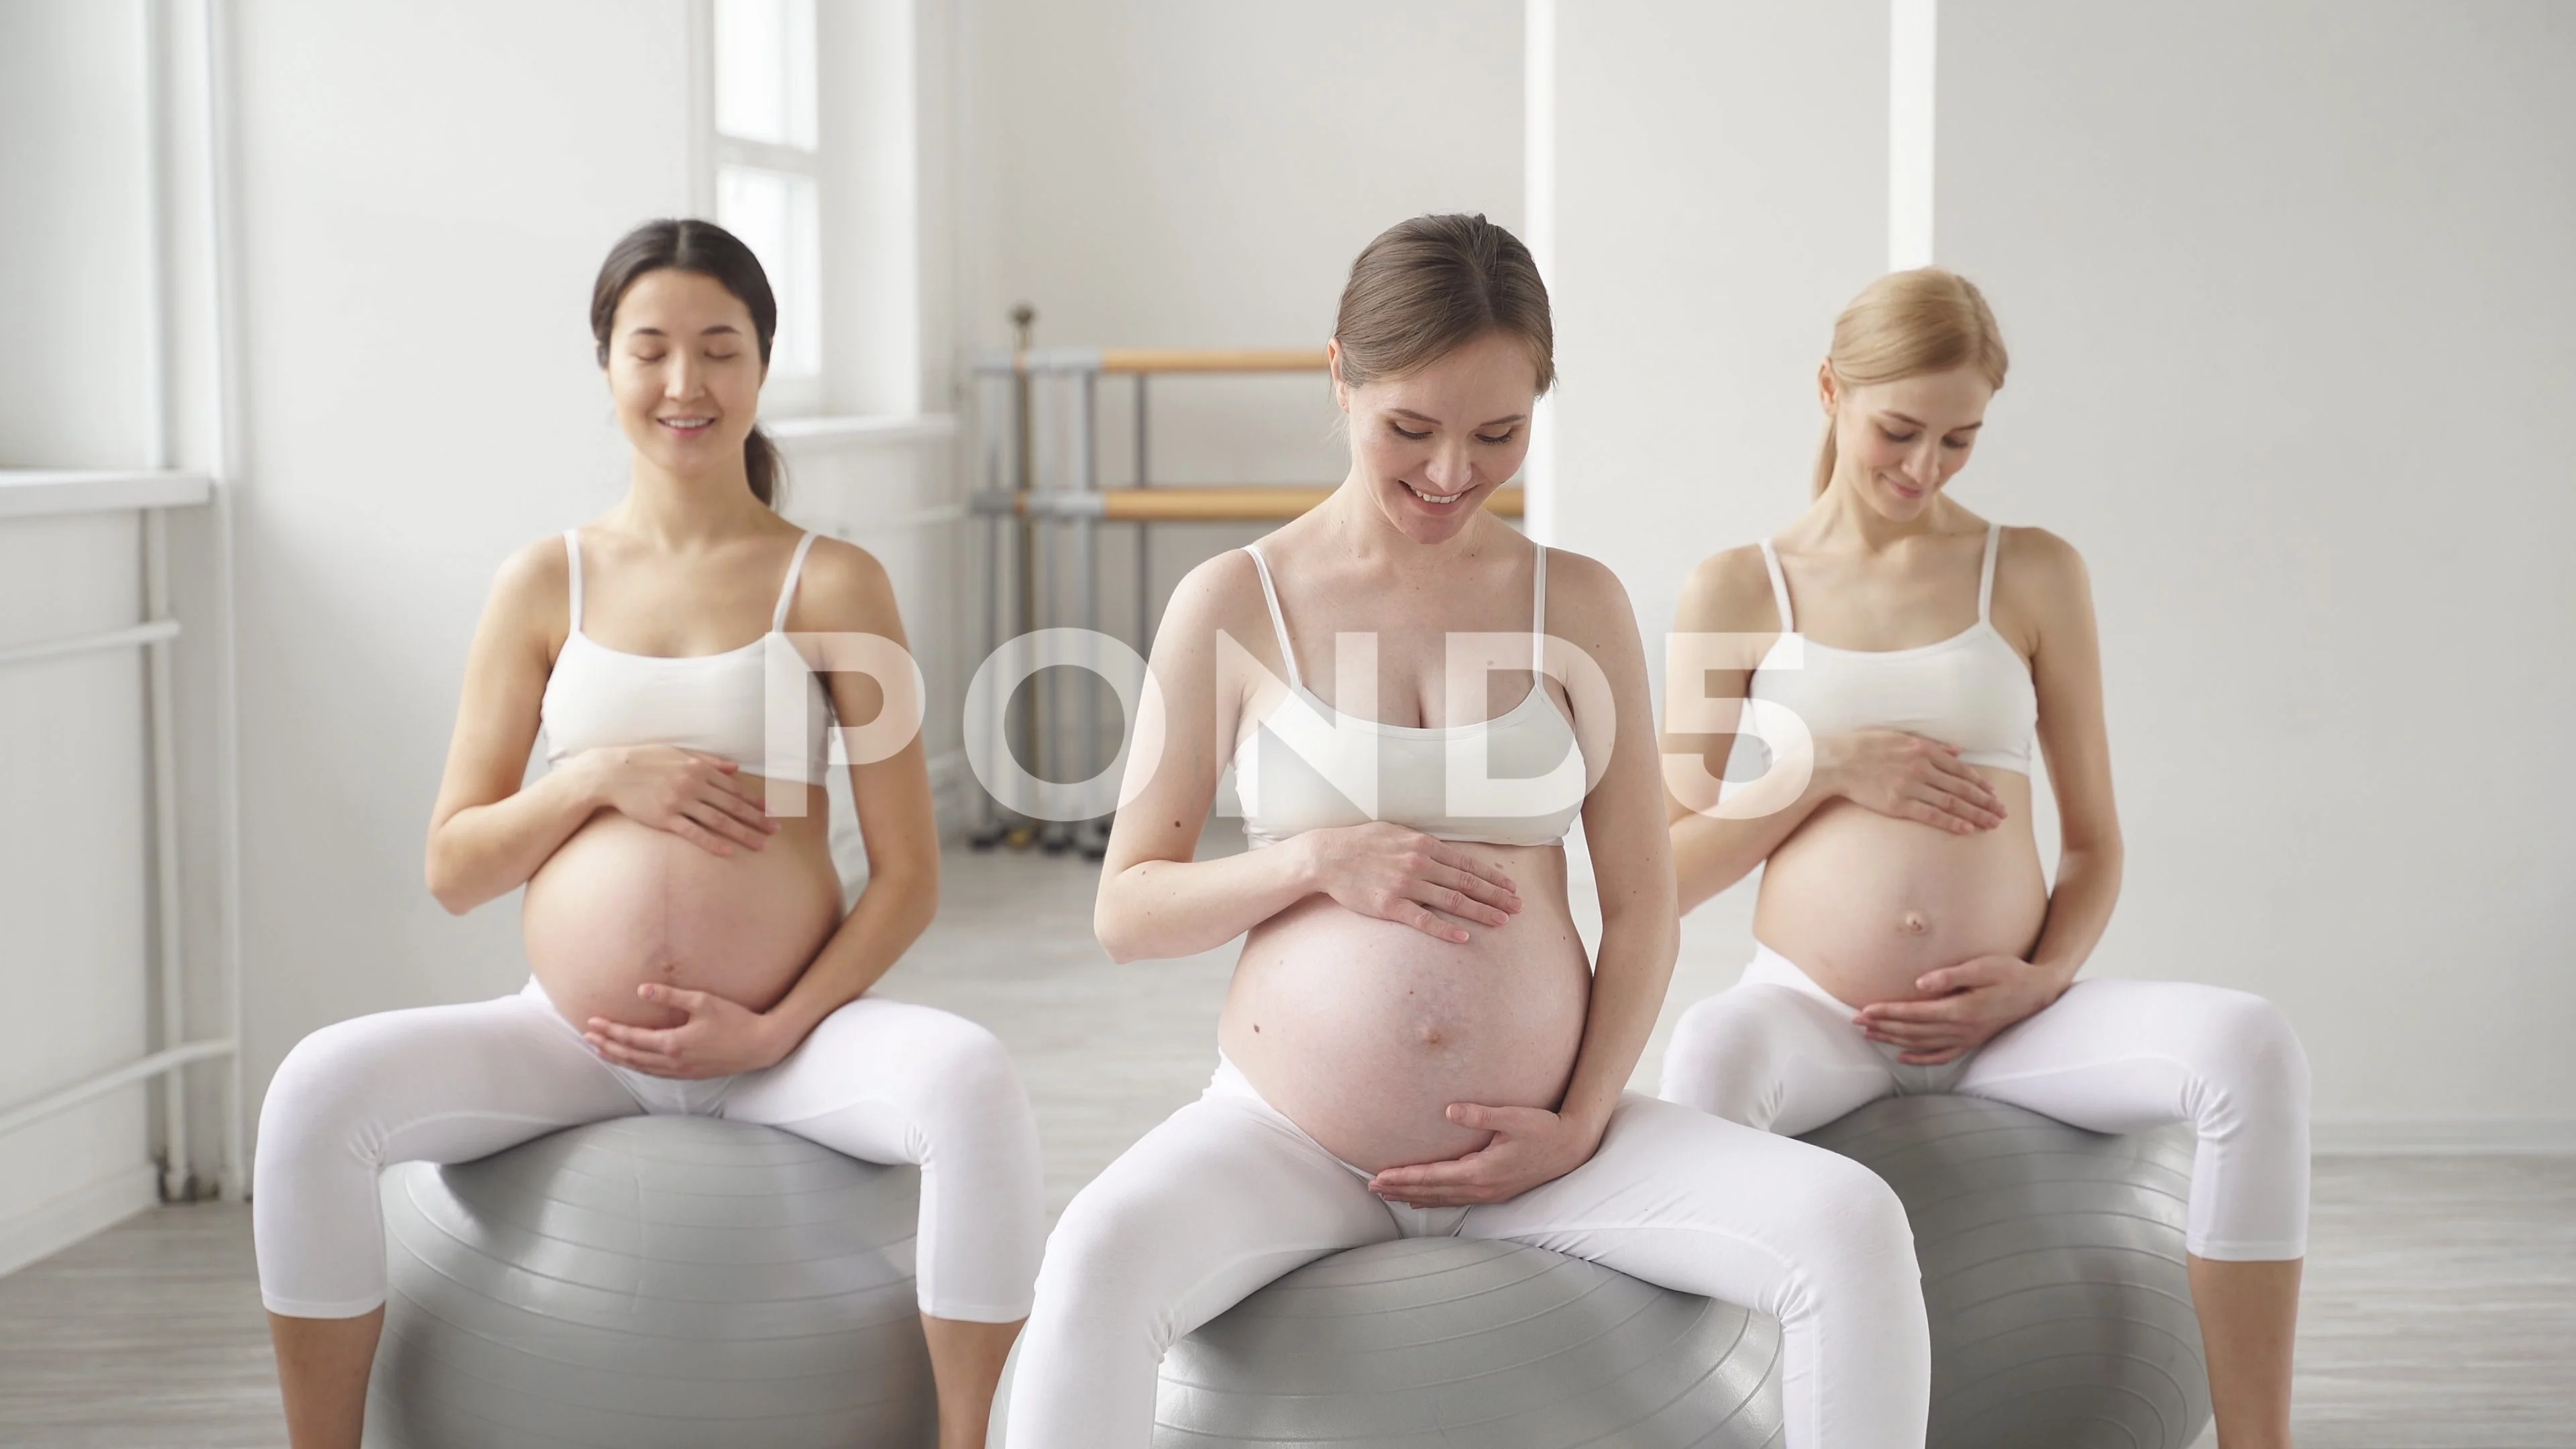 danial wooten add pregnant women naked pics photo